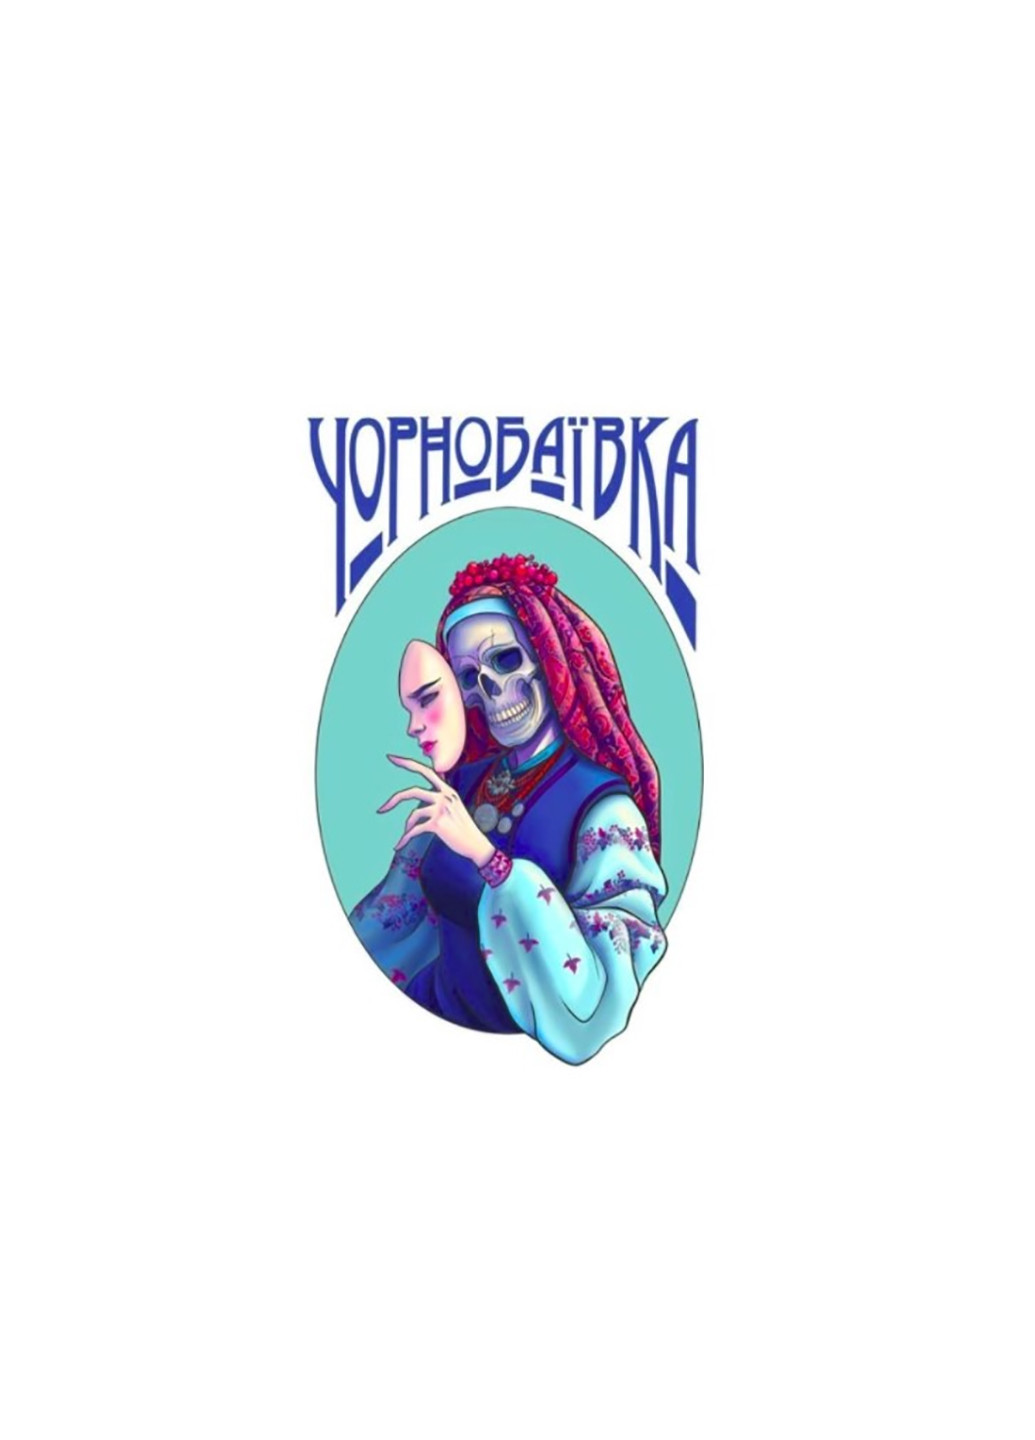 Репродукция на холсте "Чернобаевка" 3040 No Brand (256782703)